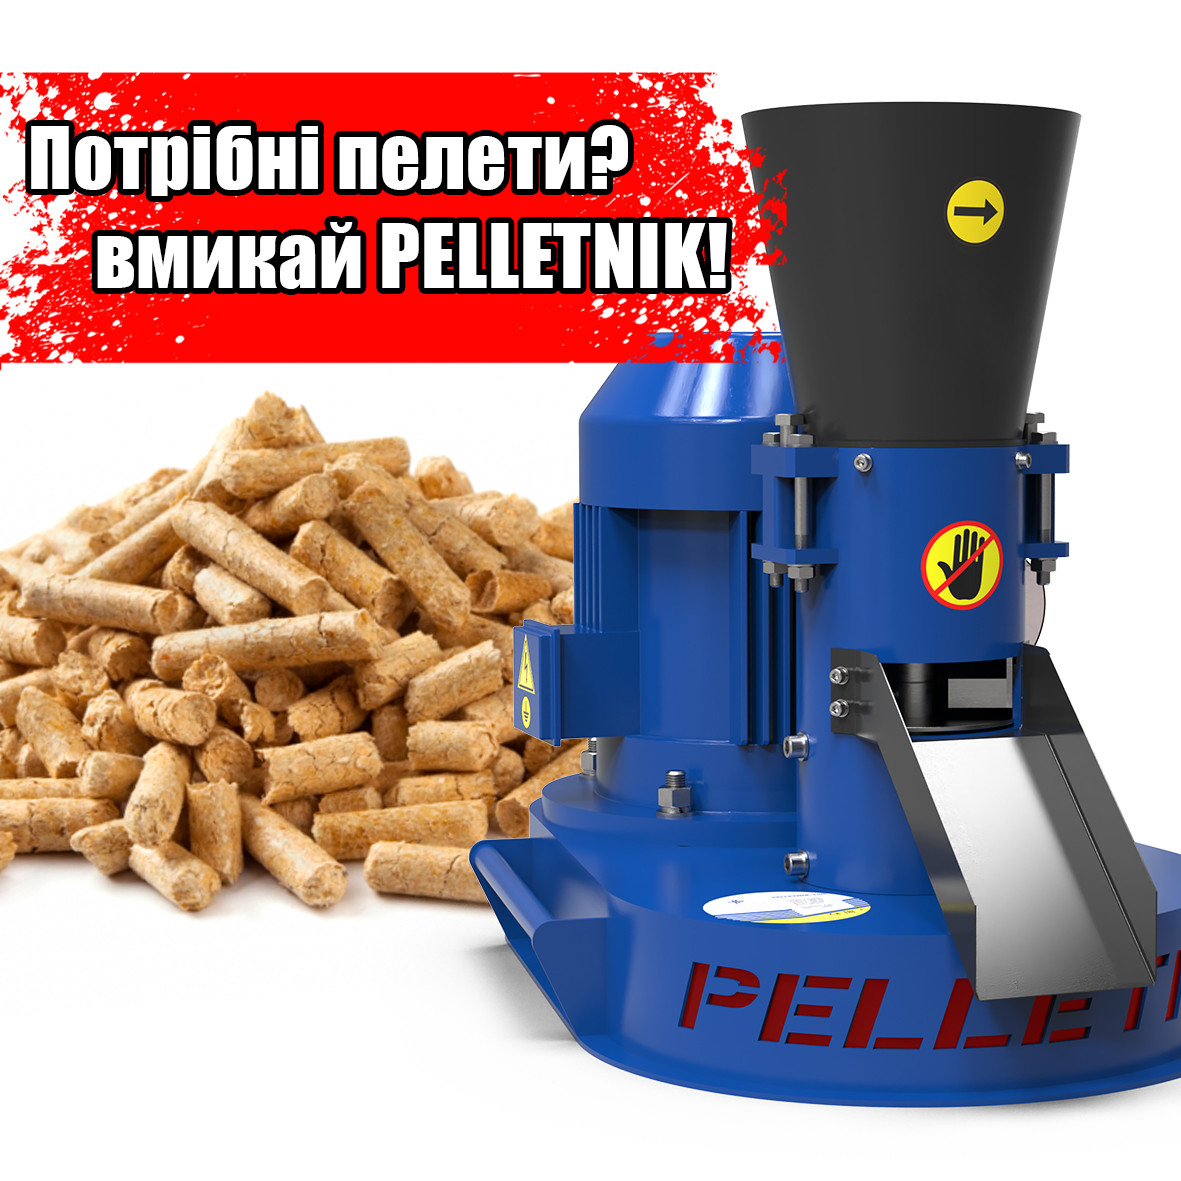 Гранулятор пелет Pelletnik-150